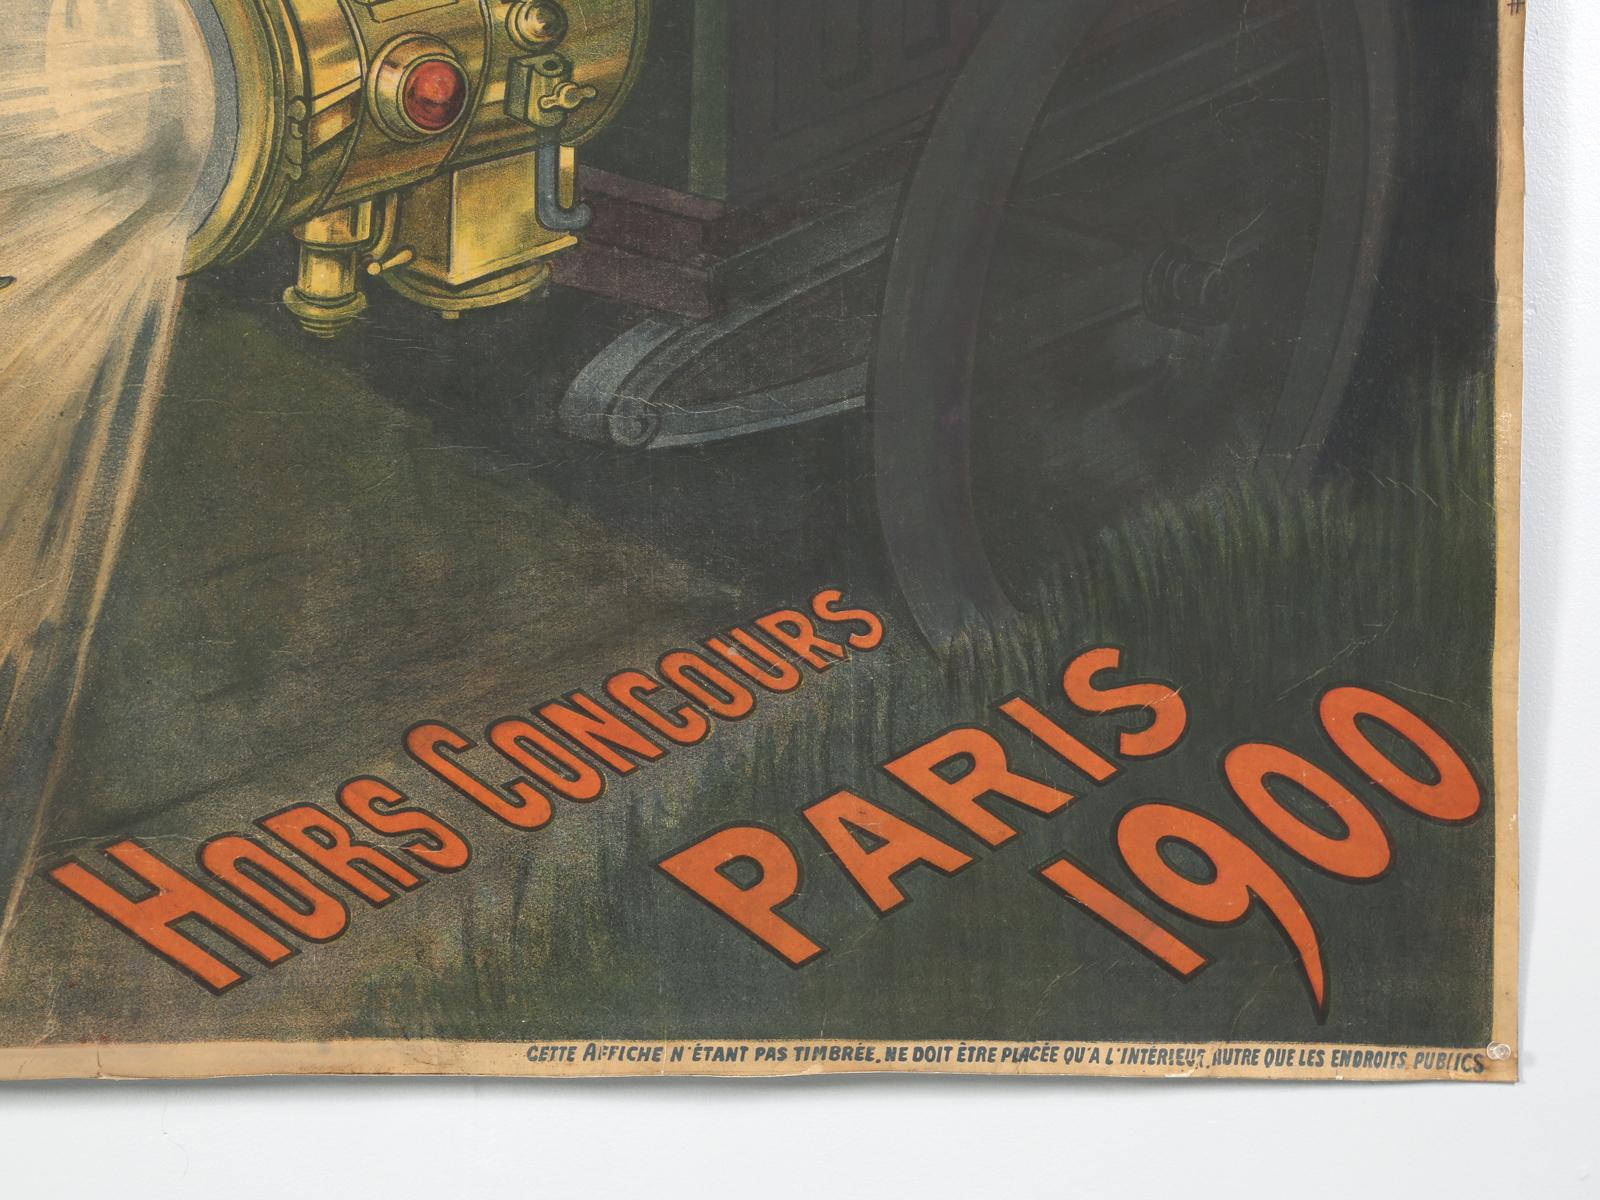 Phares Ducellier Large Original Poster by P. Chappelier, Paris France, 1900 For Sale 8